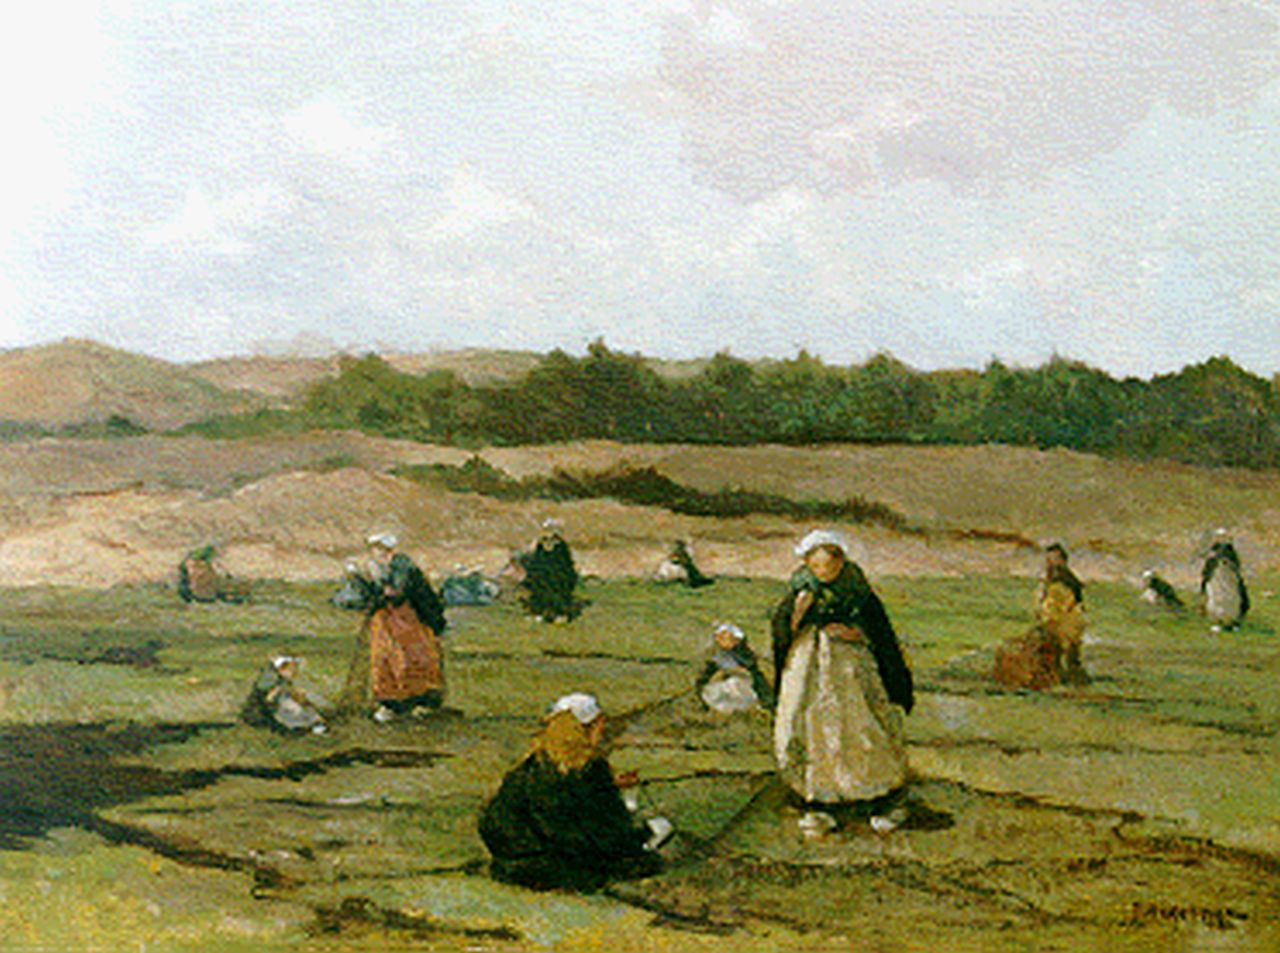 Akkeringa J.E.H.  | 'Johannes Evert' Hendrik Akkeringa, Nettenboetsters achter de duinen, olieverf op doek 40,3 x 50,4 cm, gesigneerd rechtsonder